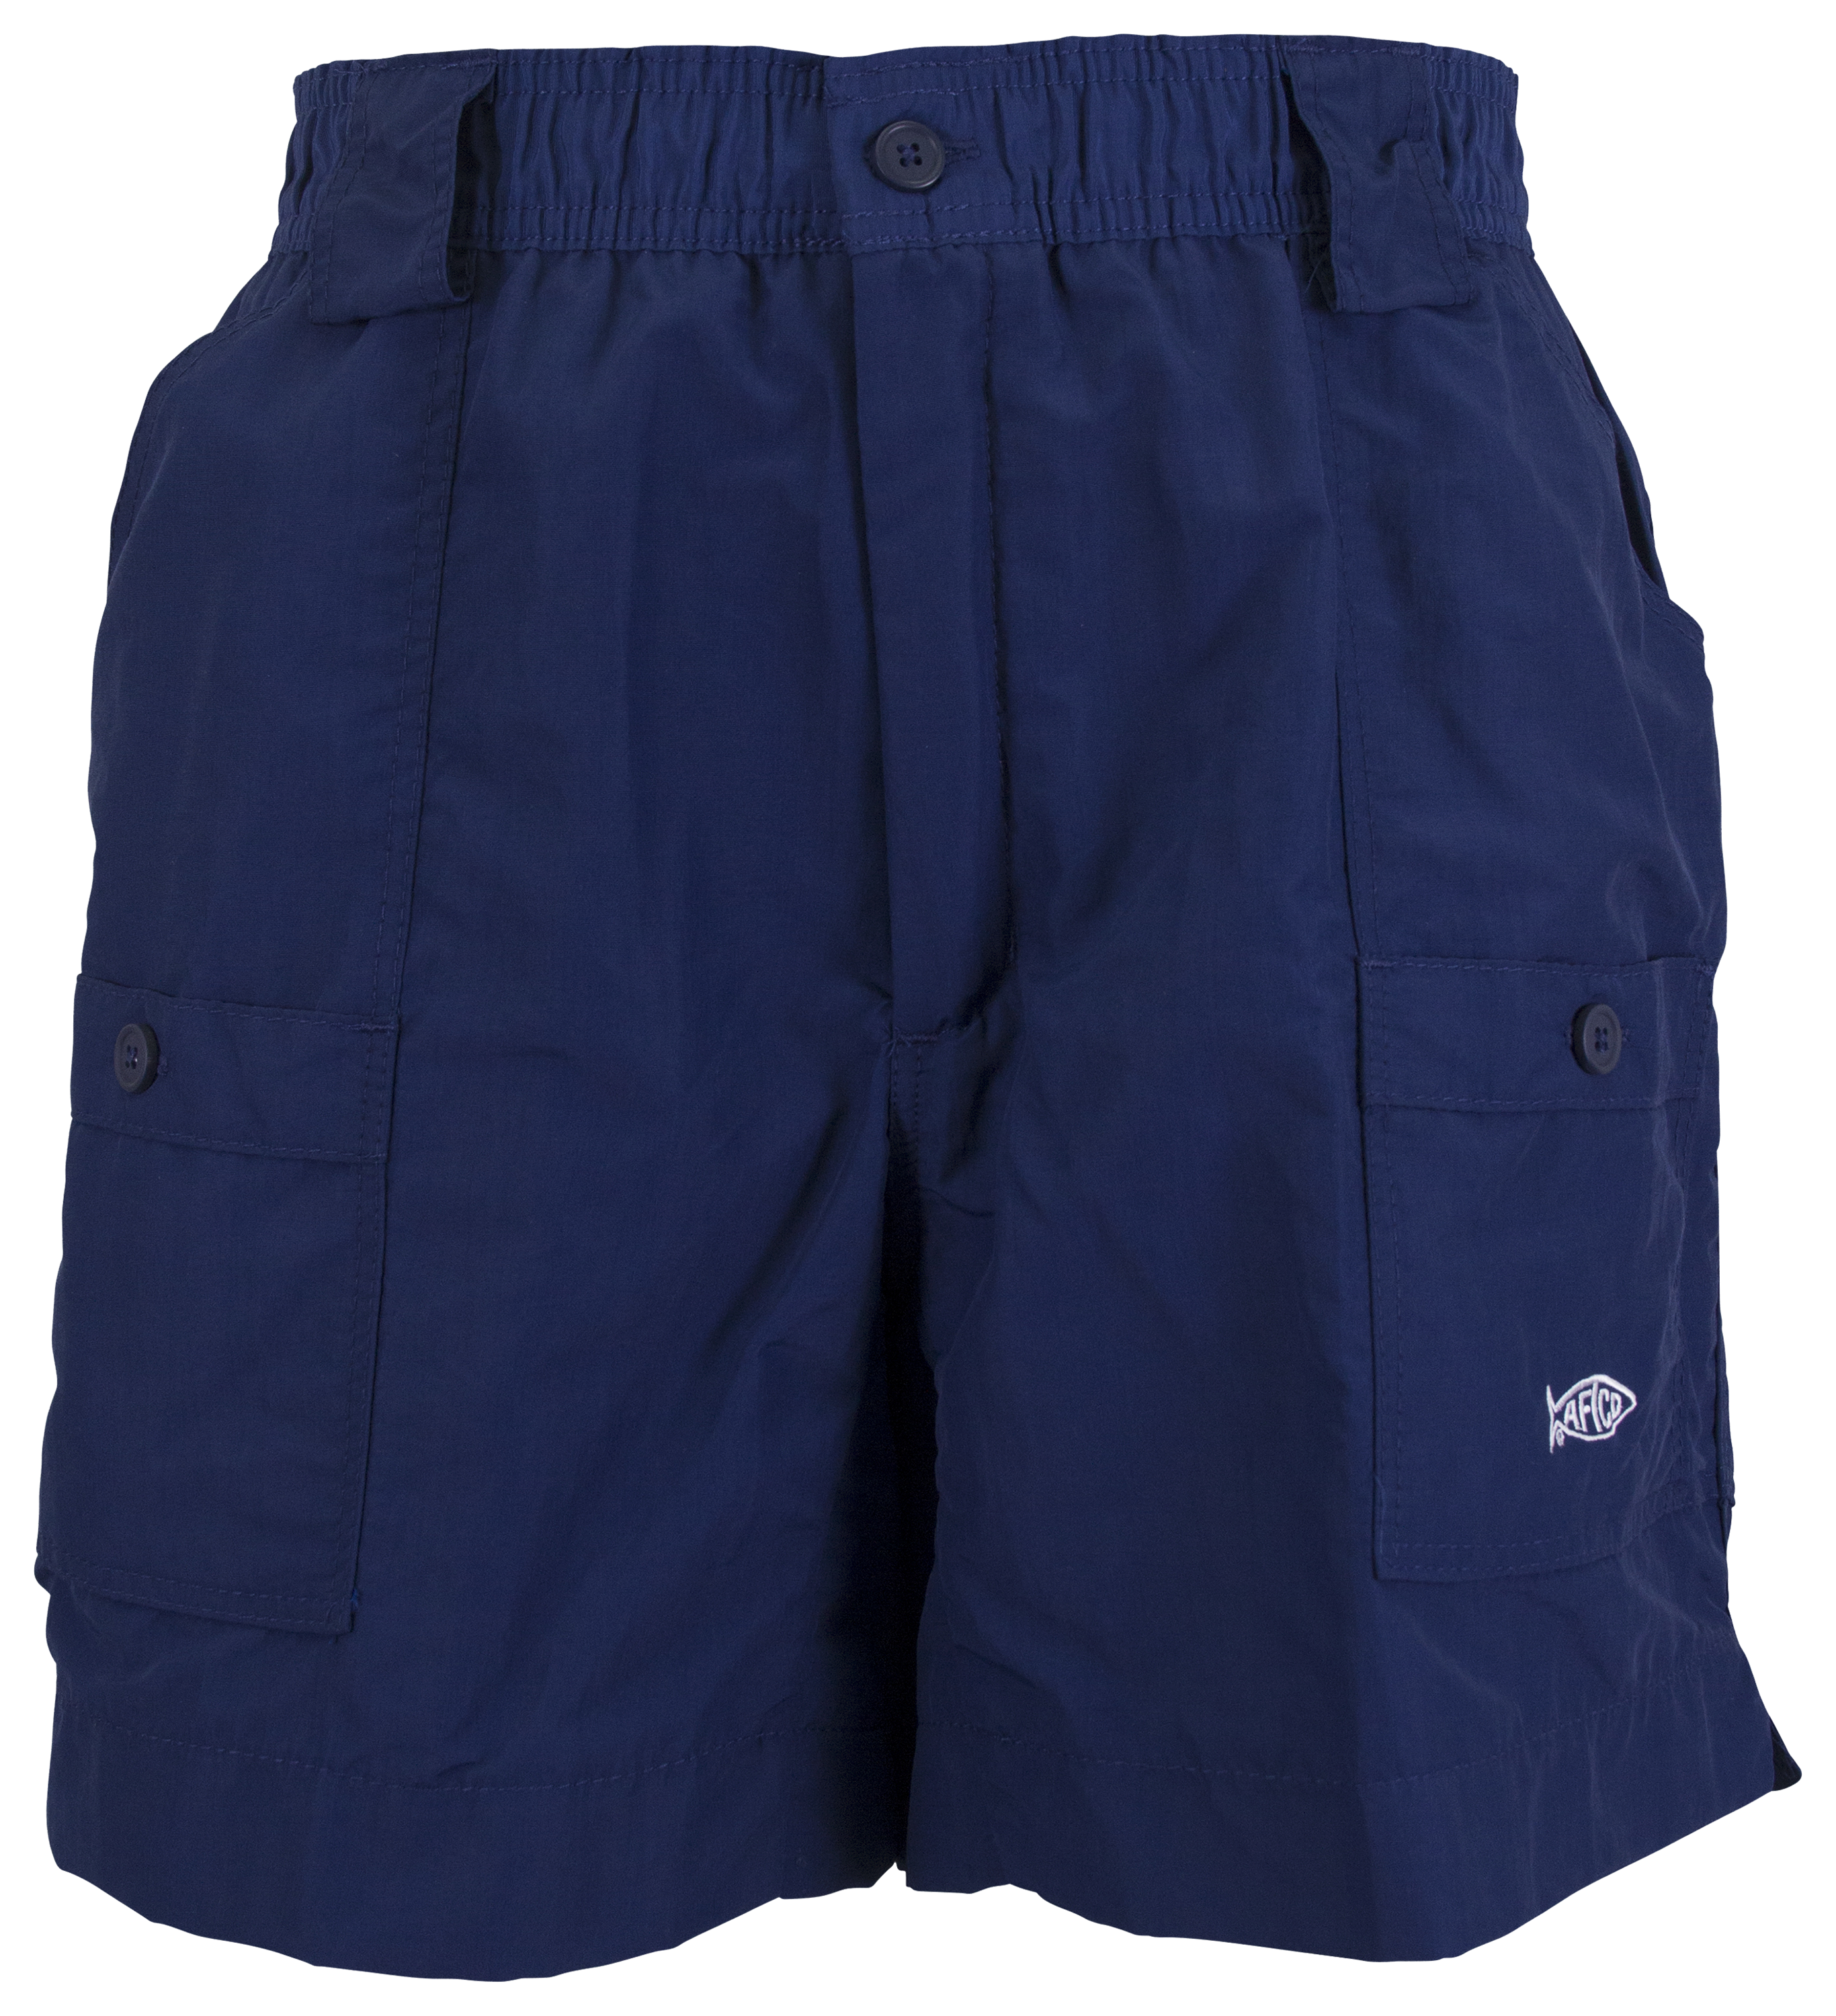 AFTCO Original Fishing Shorts for Men - Navy - 36